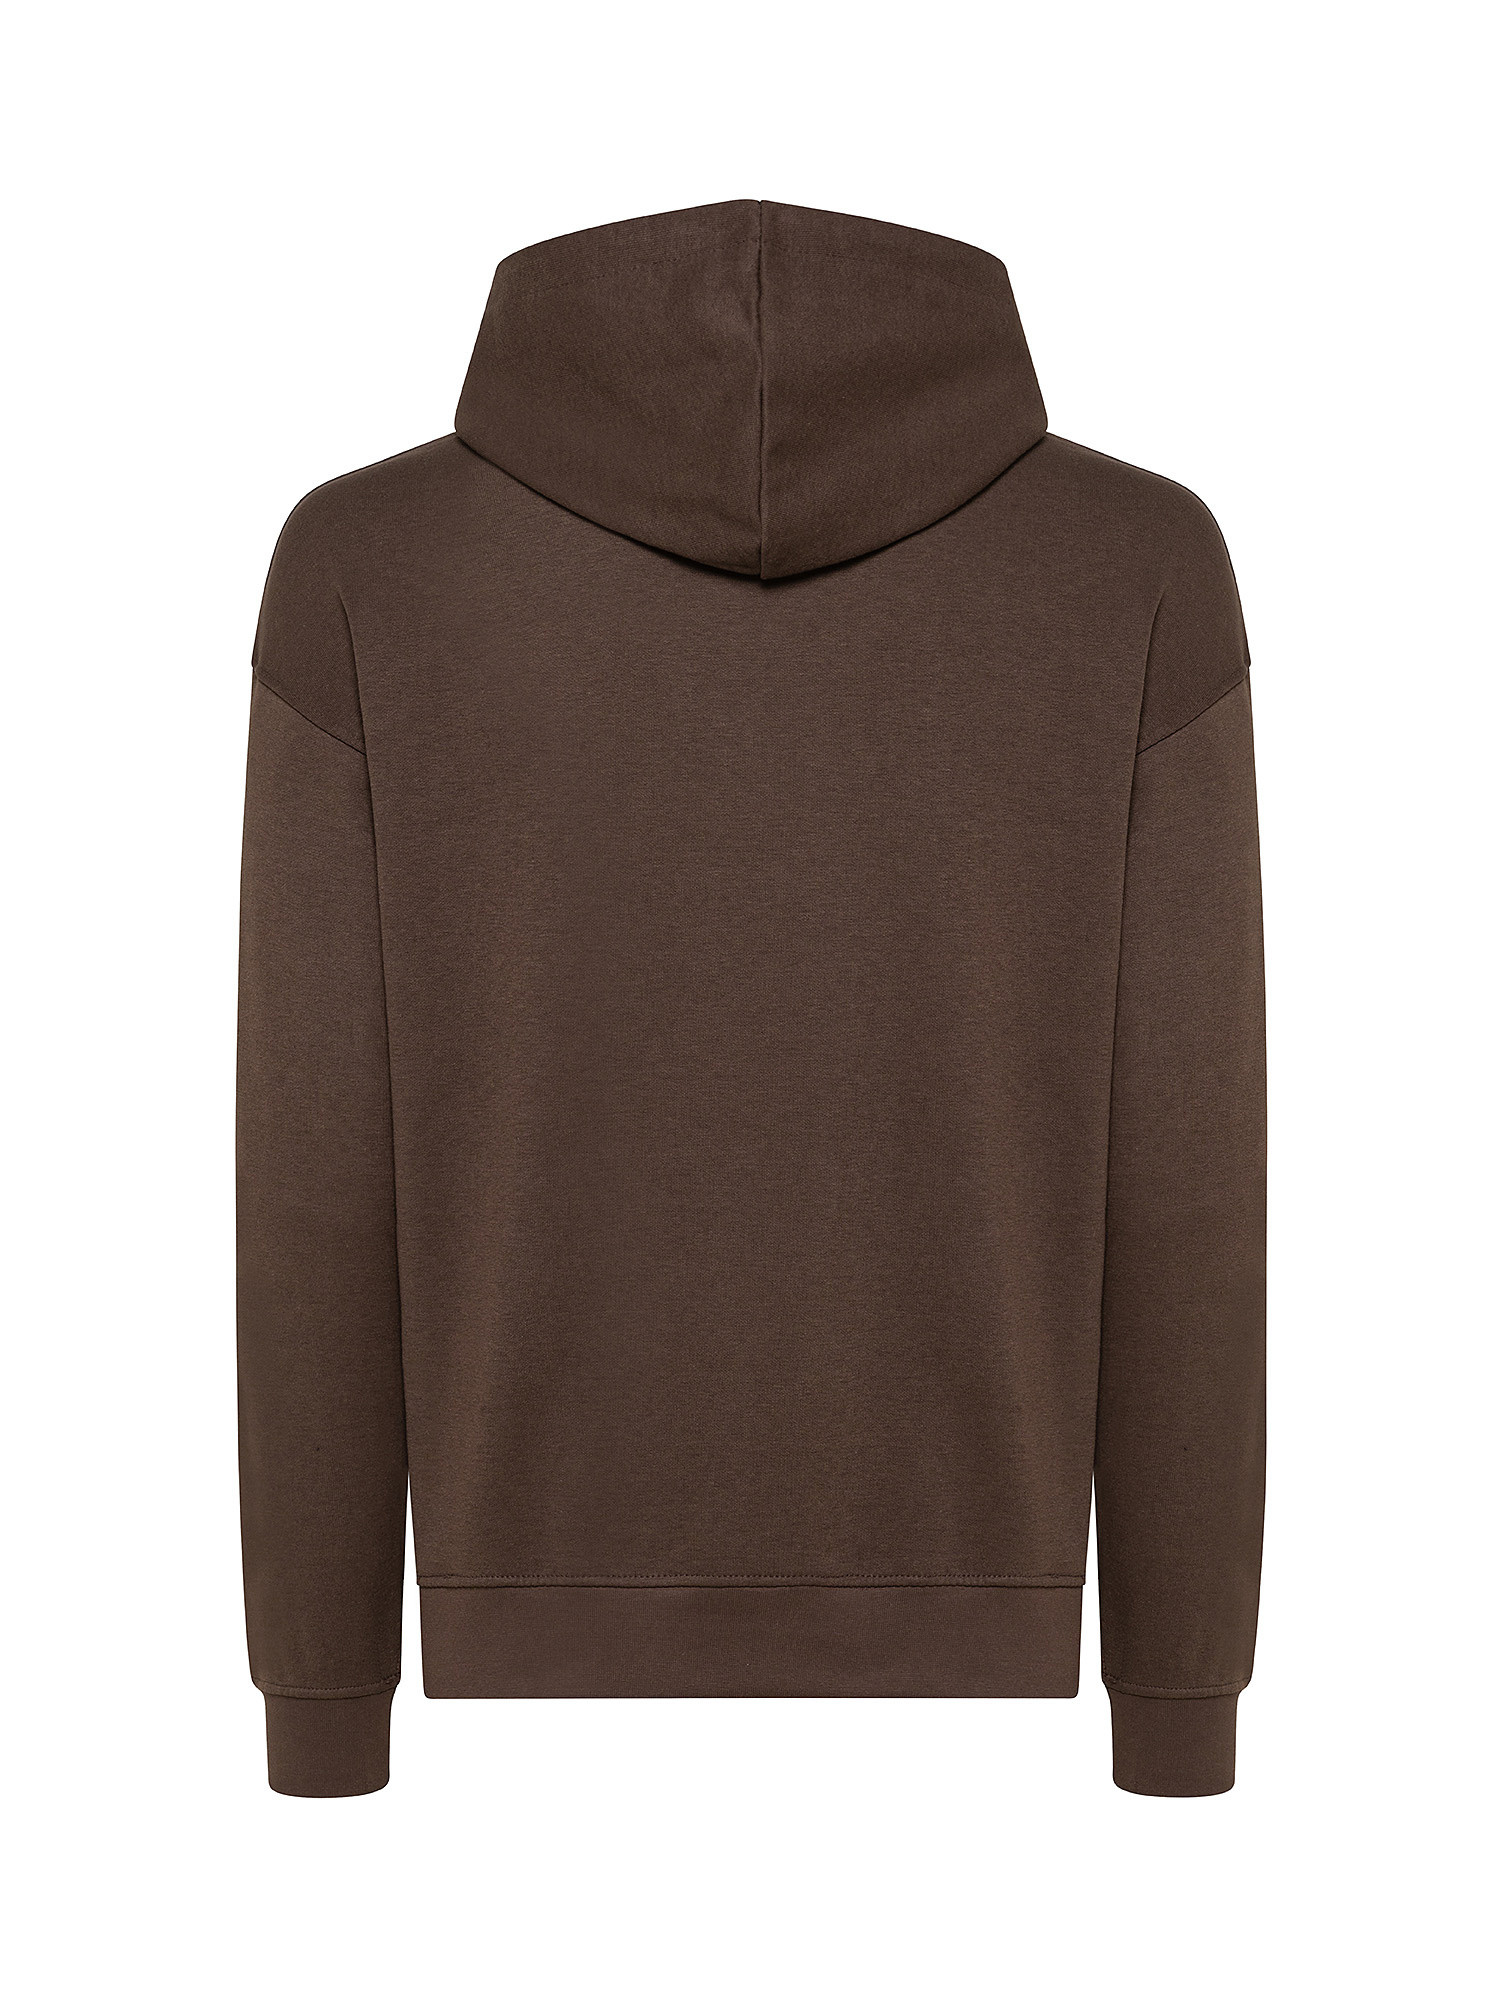 Sweatshirt with hood and long sleeves, Brown, large image number 1